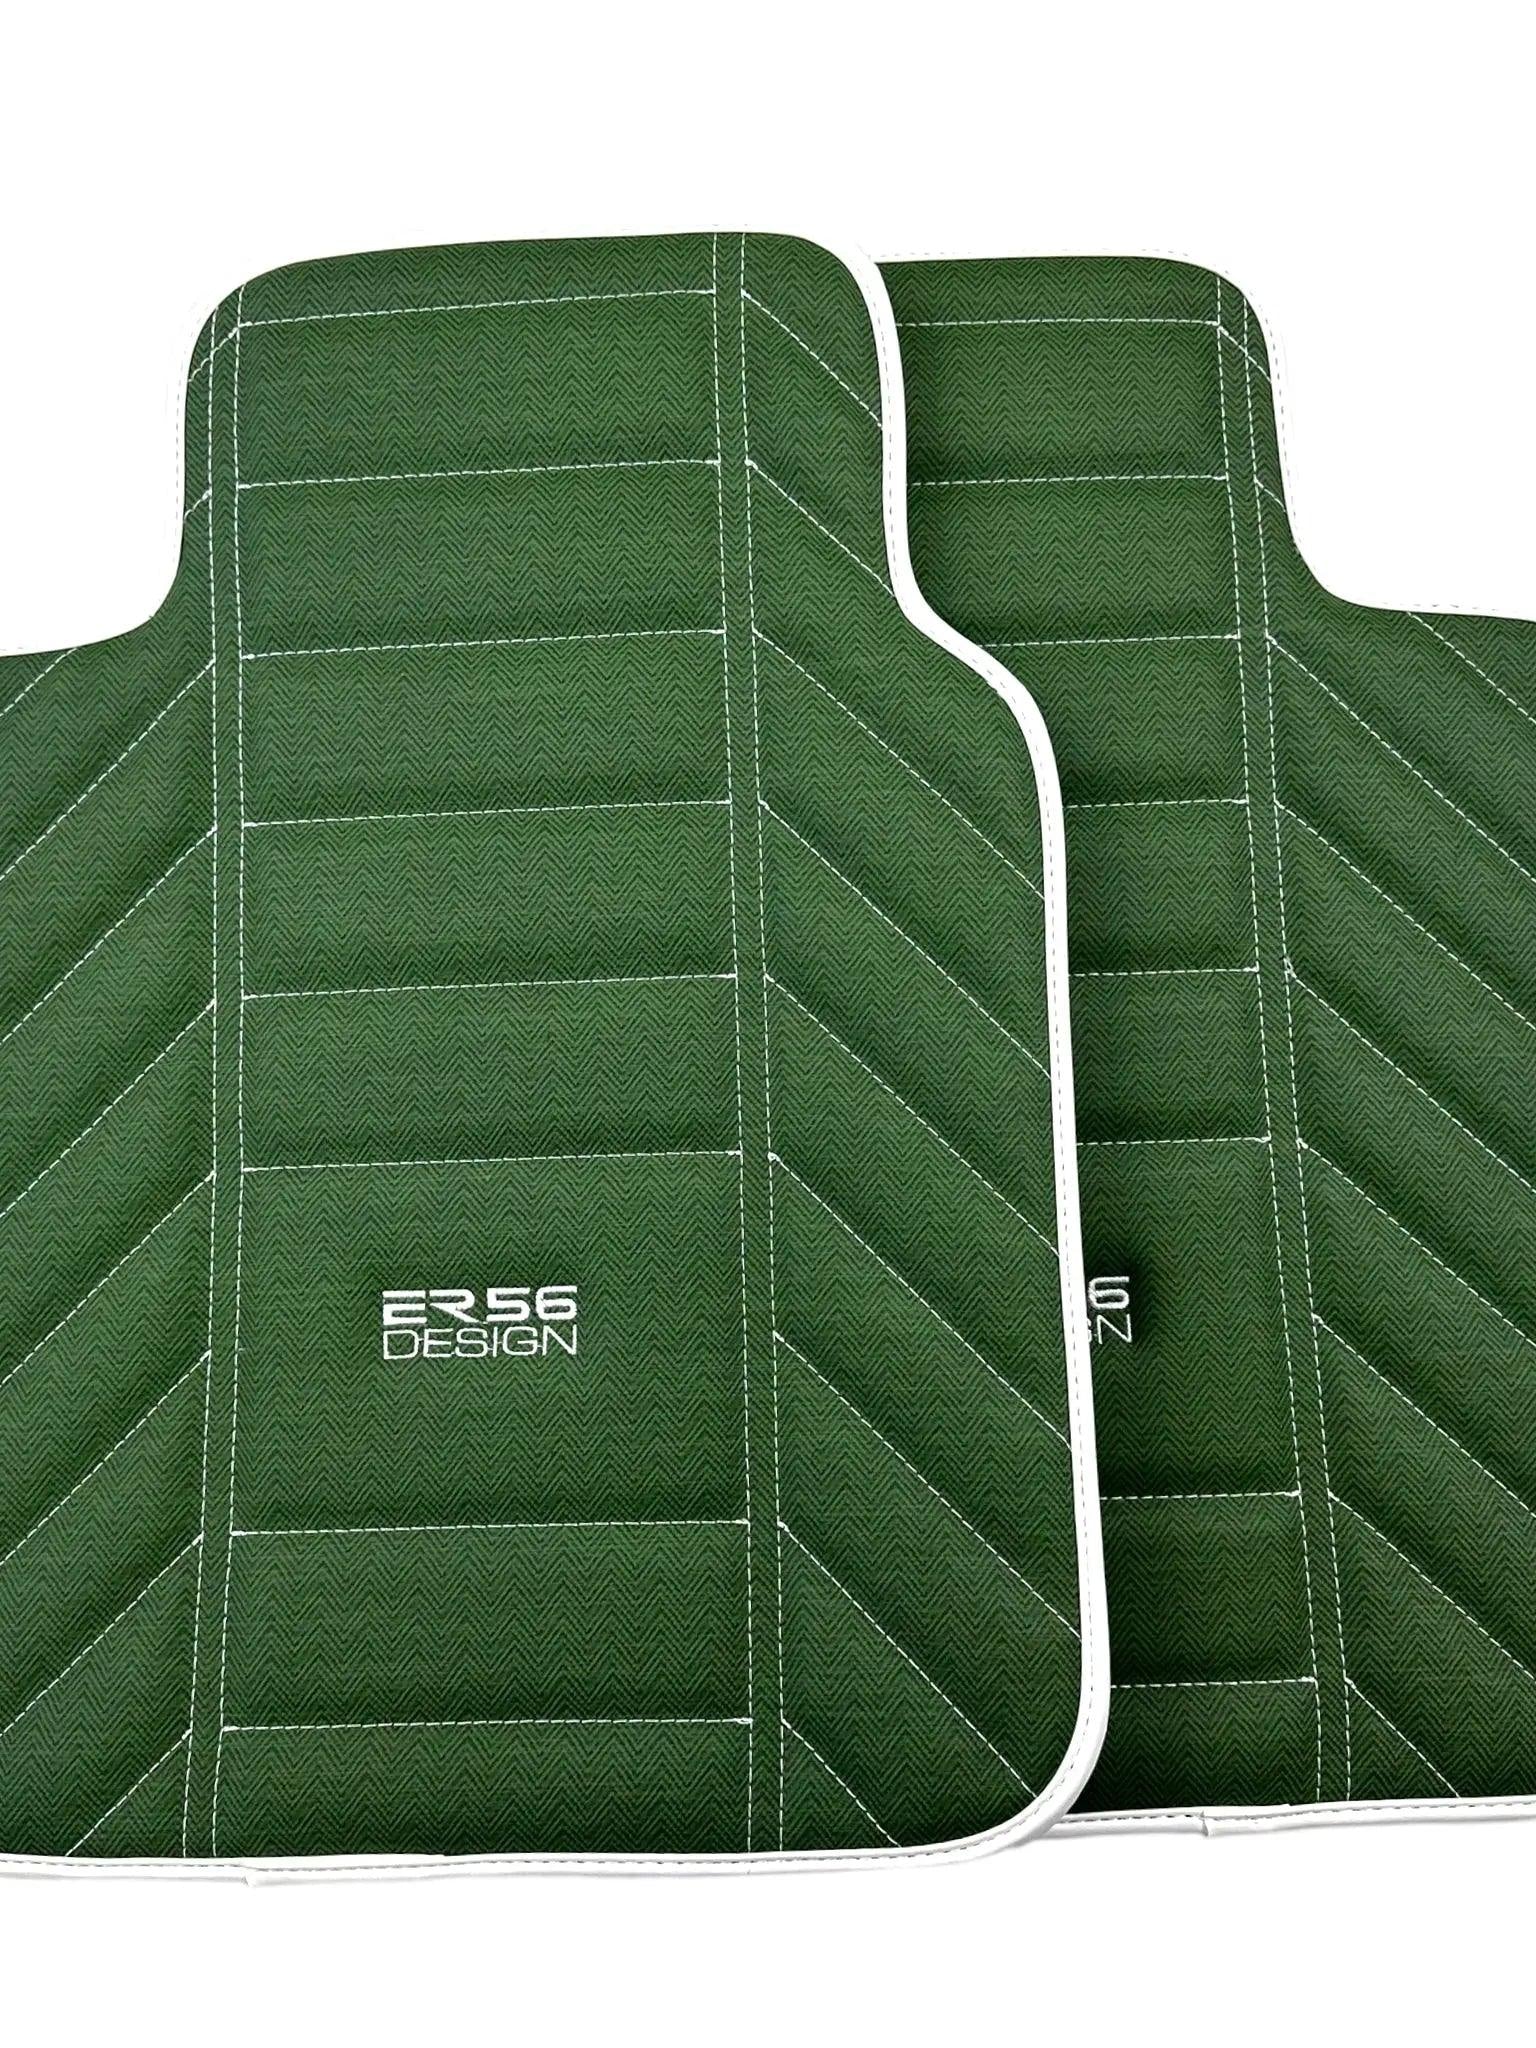 Green Leather Floor Mats For Rolls Royce Black Badge Wraith (2013-2023)